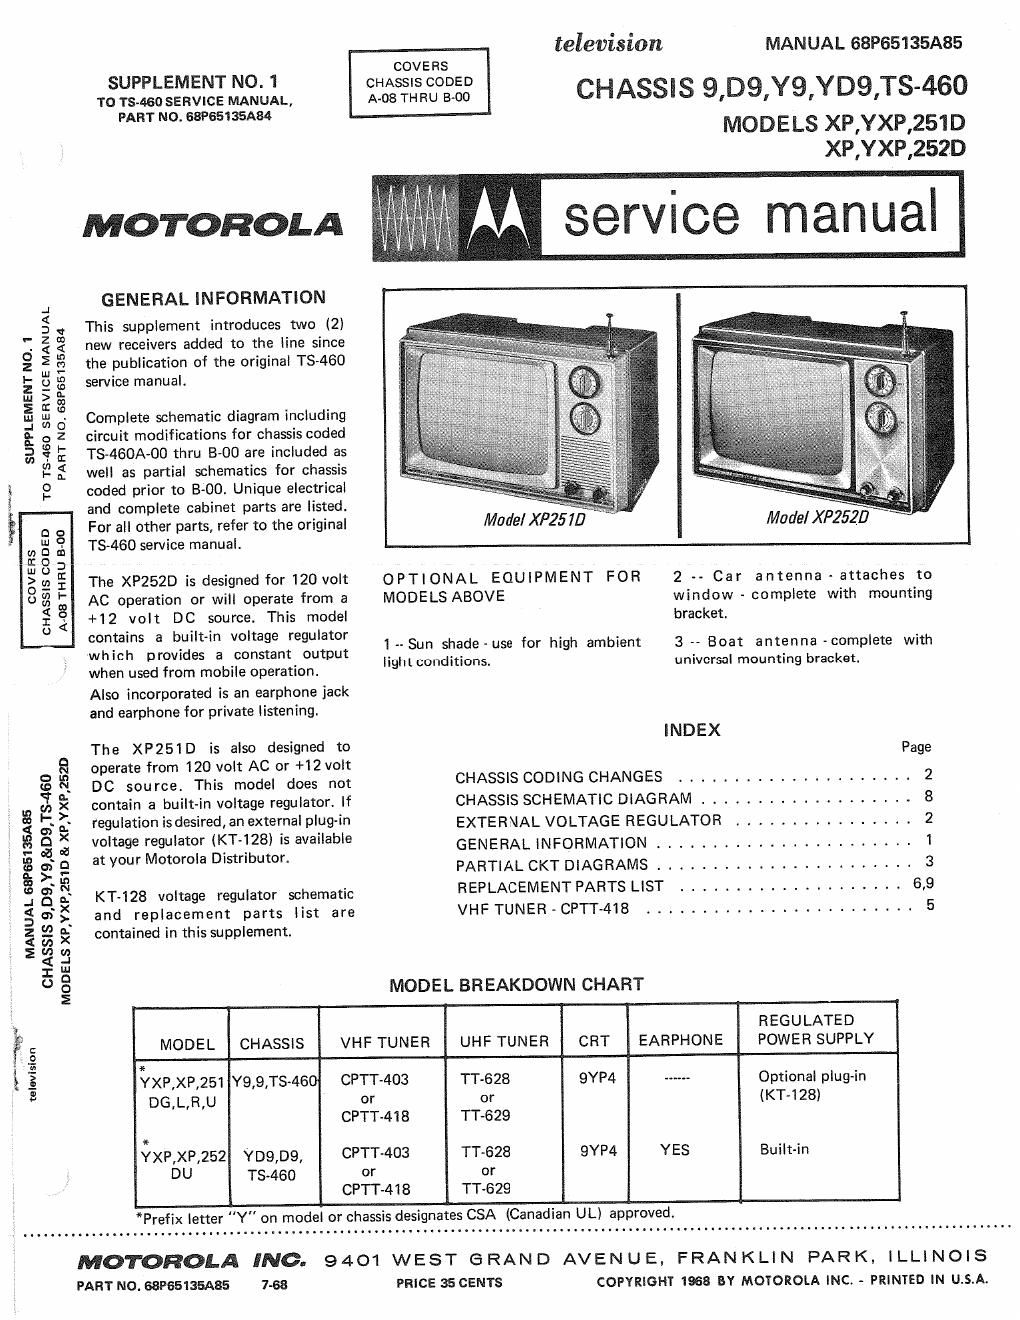 motorola xp 252 d service manual